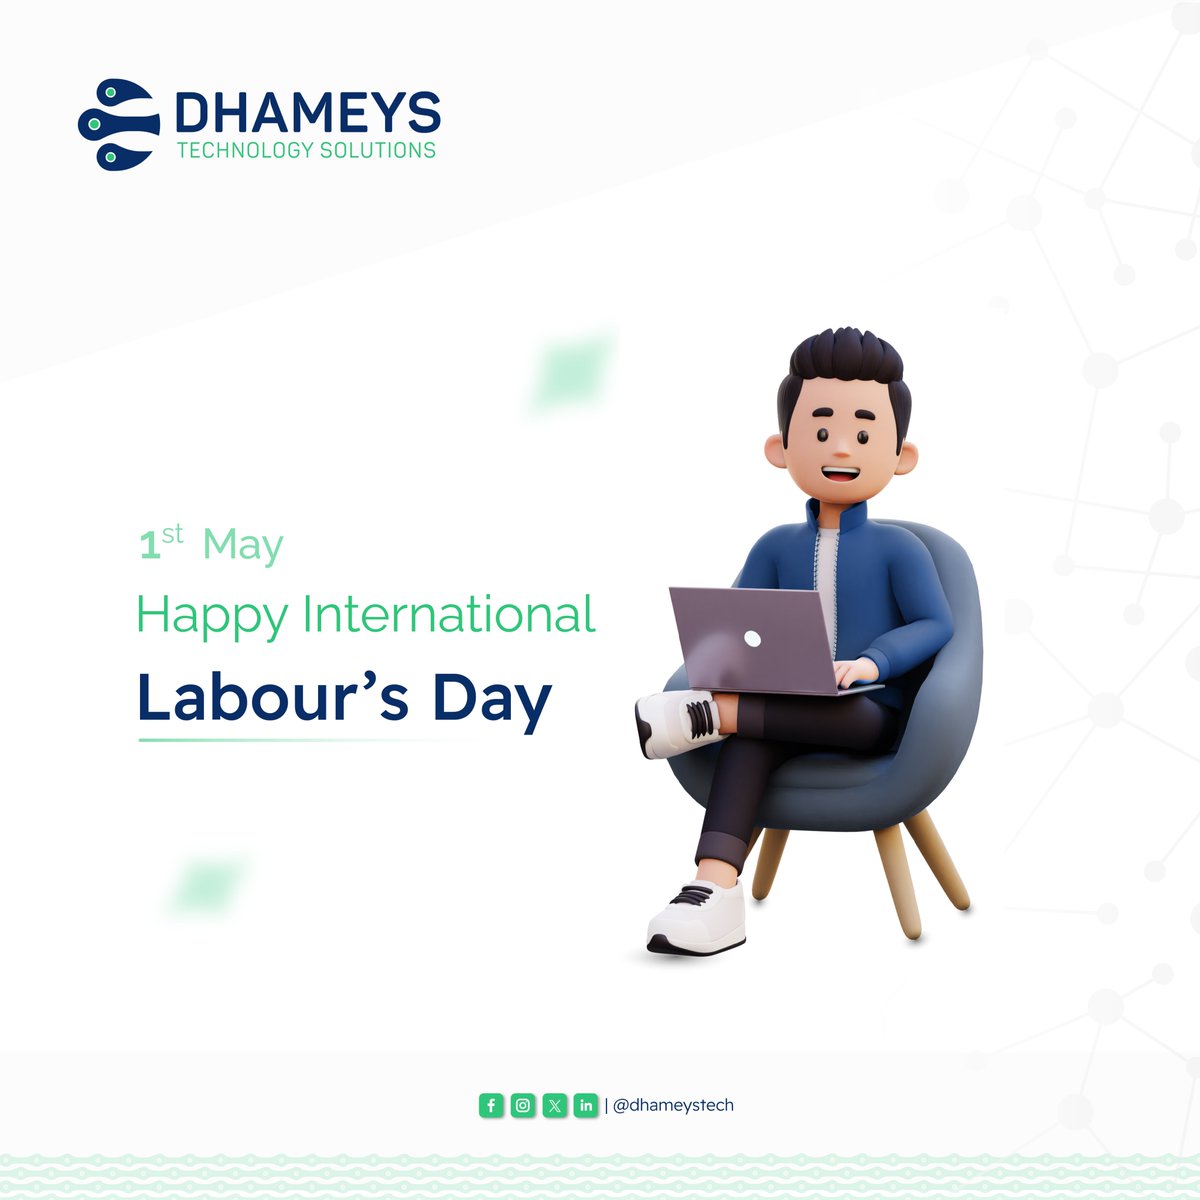 Happy International Labour's Day
#dhameystech #innovations #TechSolutions #TechInnovations
#labourday